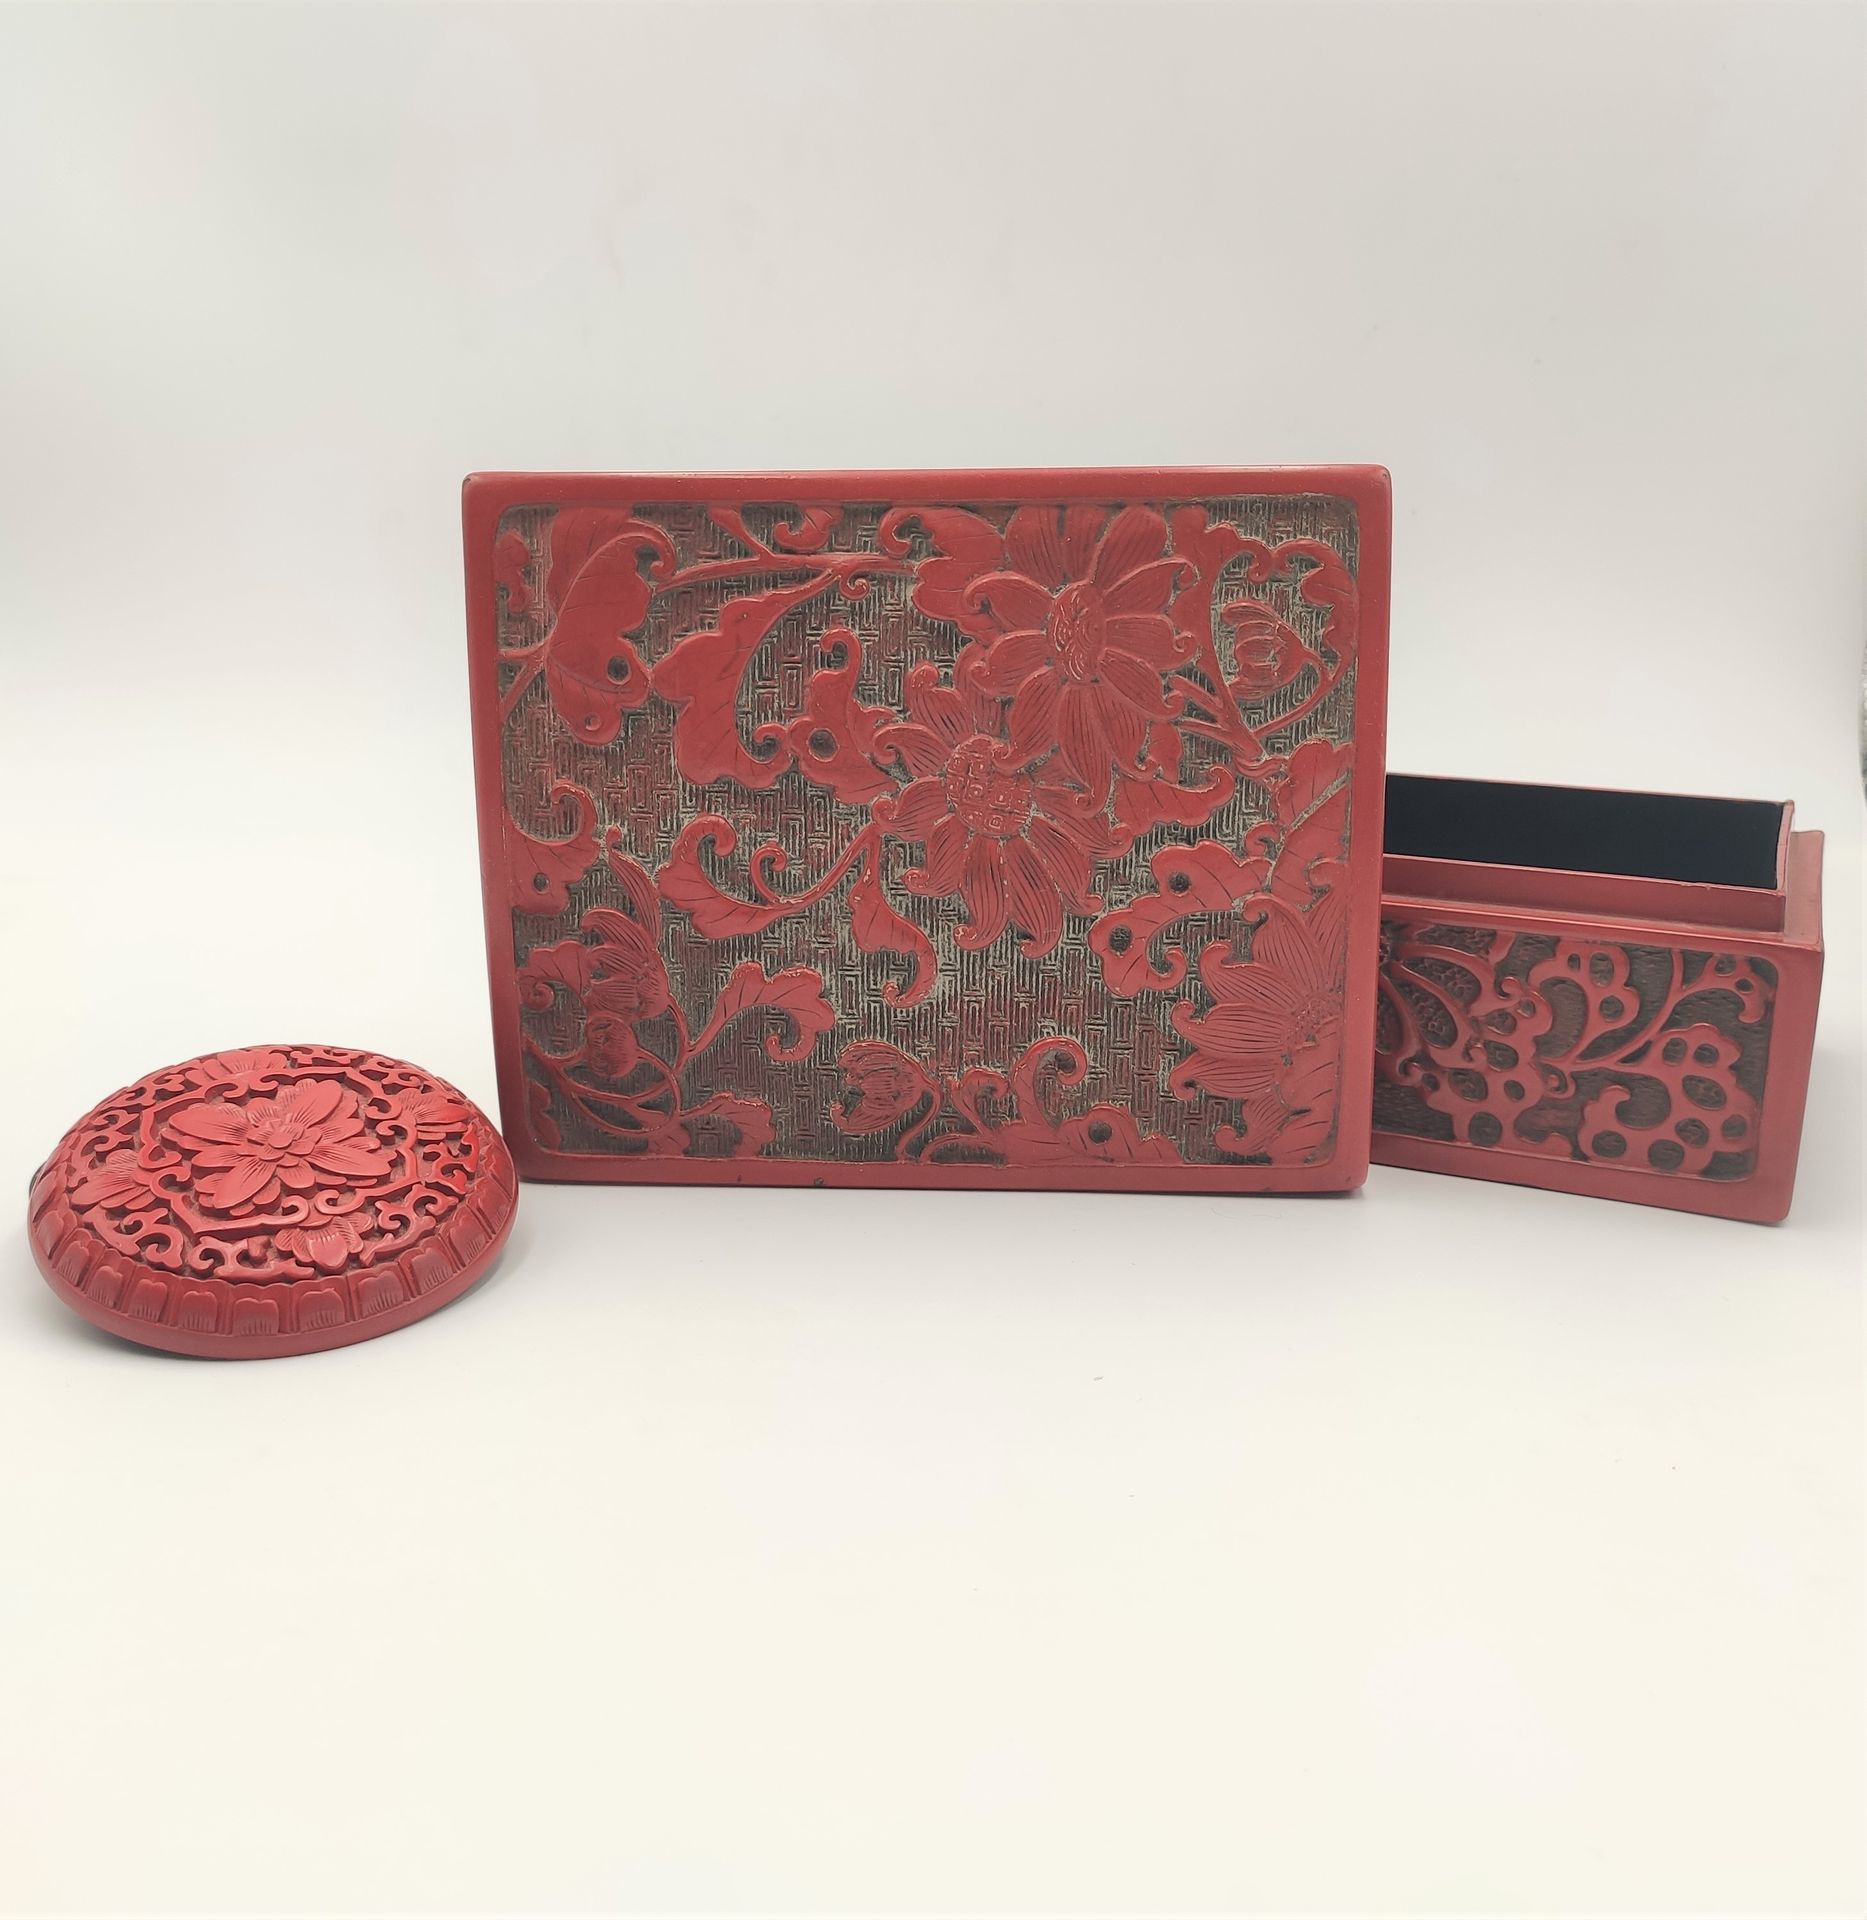 CHINE 两个红色朱砂漆的盒子 一个是长方形，另一个是圆形 长方形盒子：15 x 12 x 7厘米 圆形盒子：直径7厘米